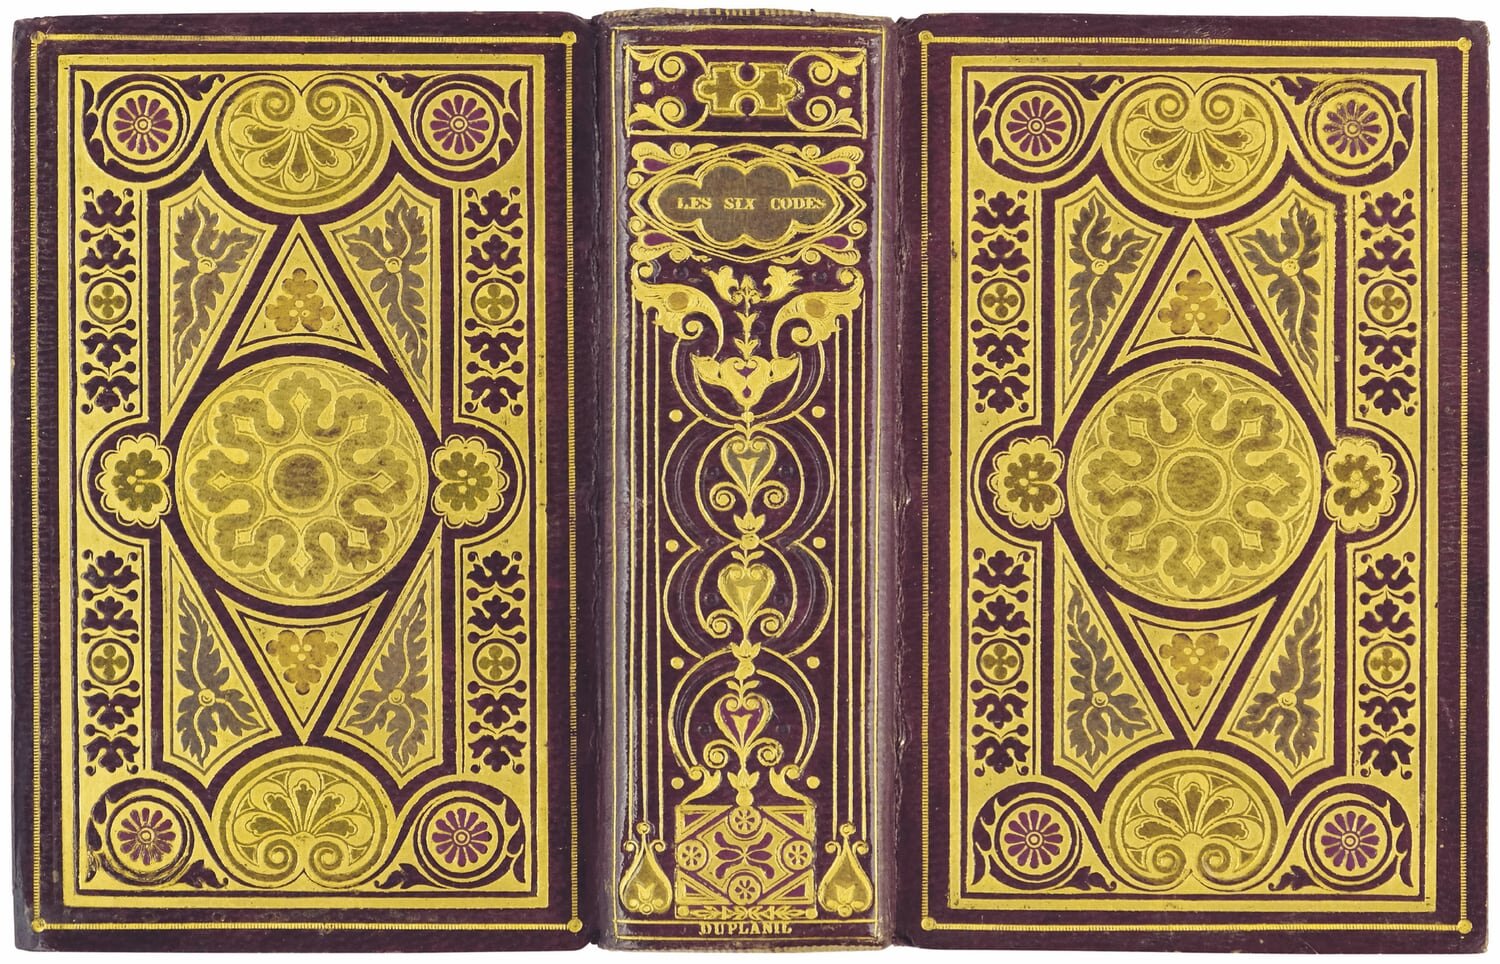  More rosettes; bindings by Duplanil fils [no. 558], Thouvenin [no. 438], Bogetti [no. 259], and Livre Mignard [no. 420].  